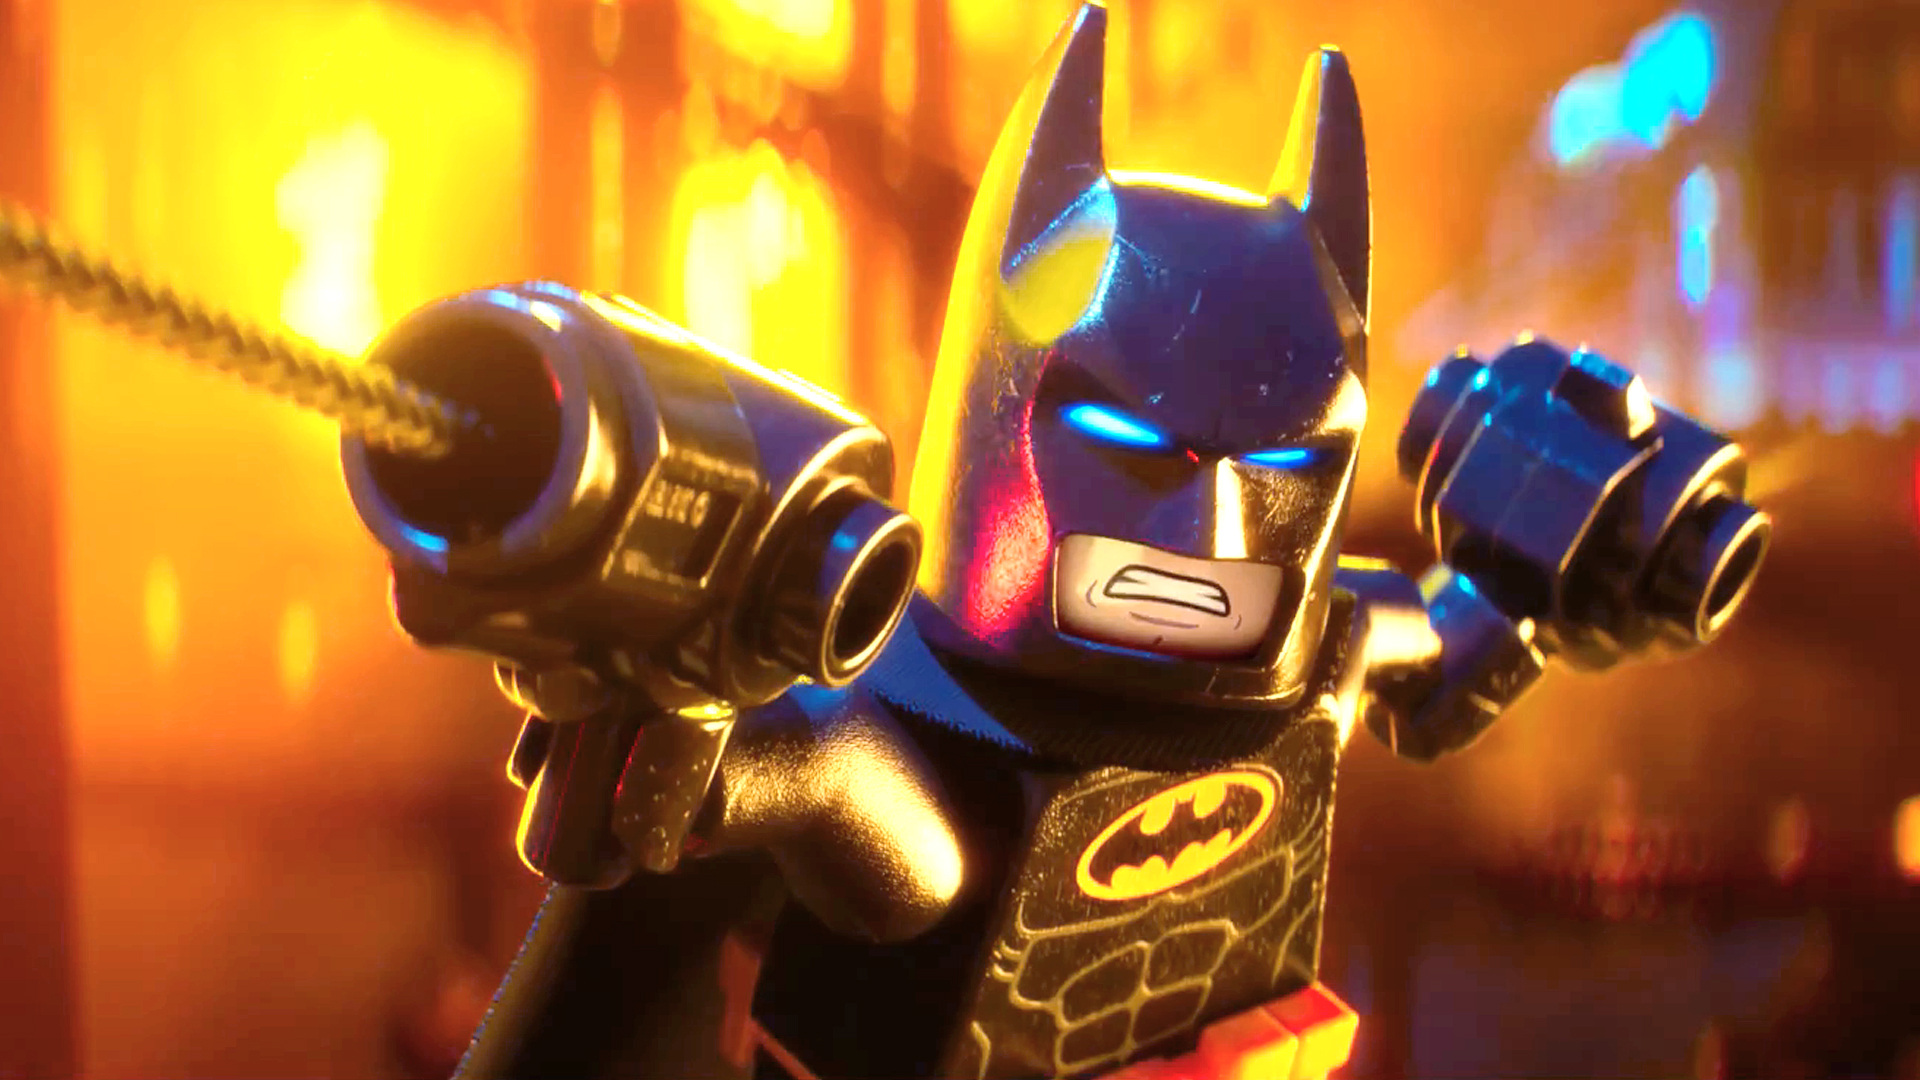 The Lego Batman Movie #2